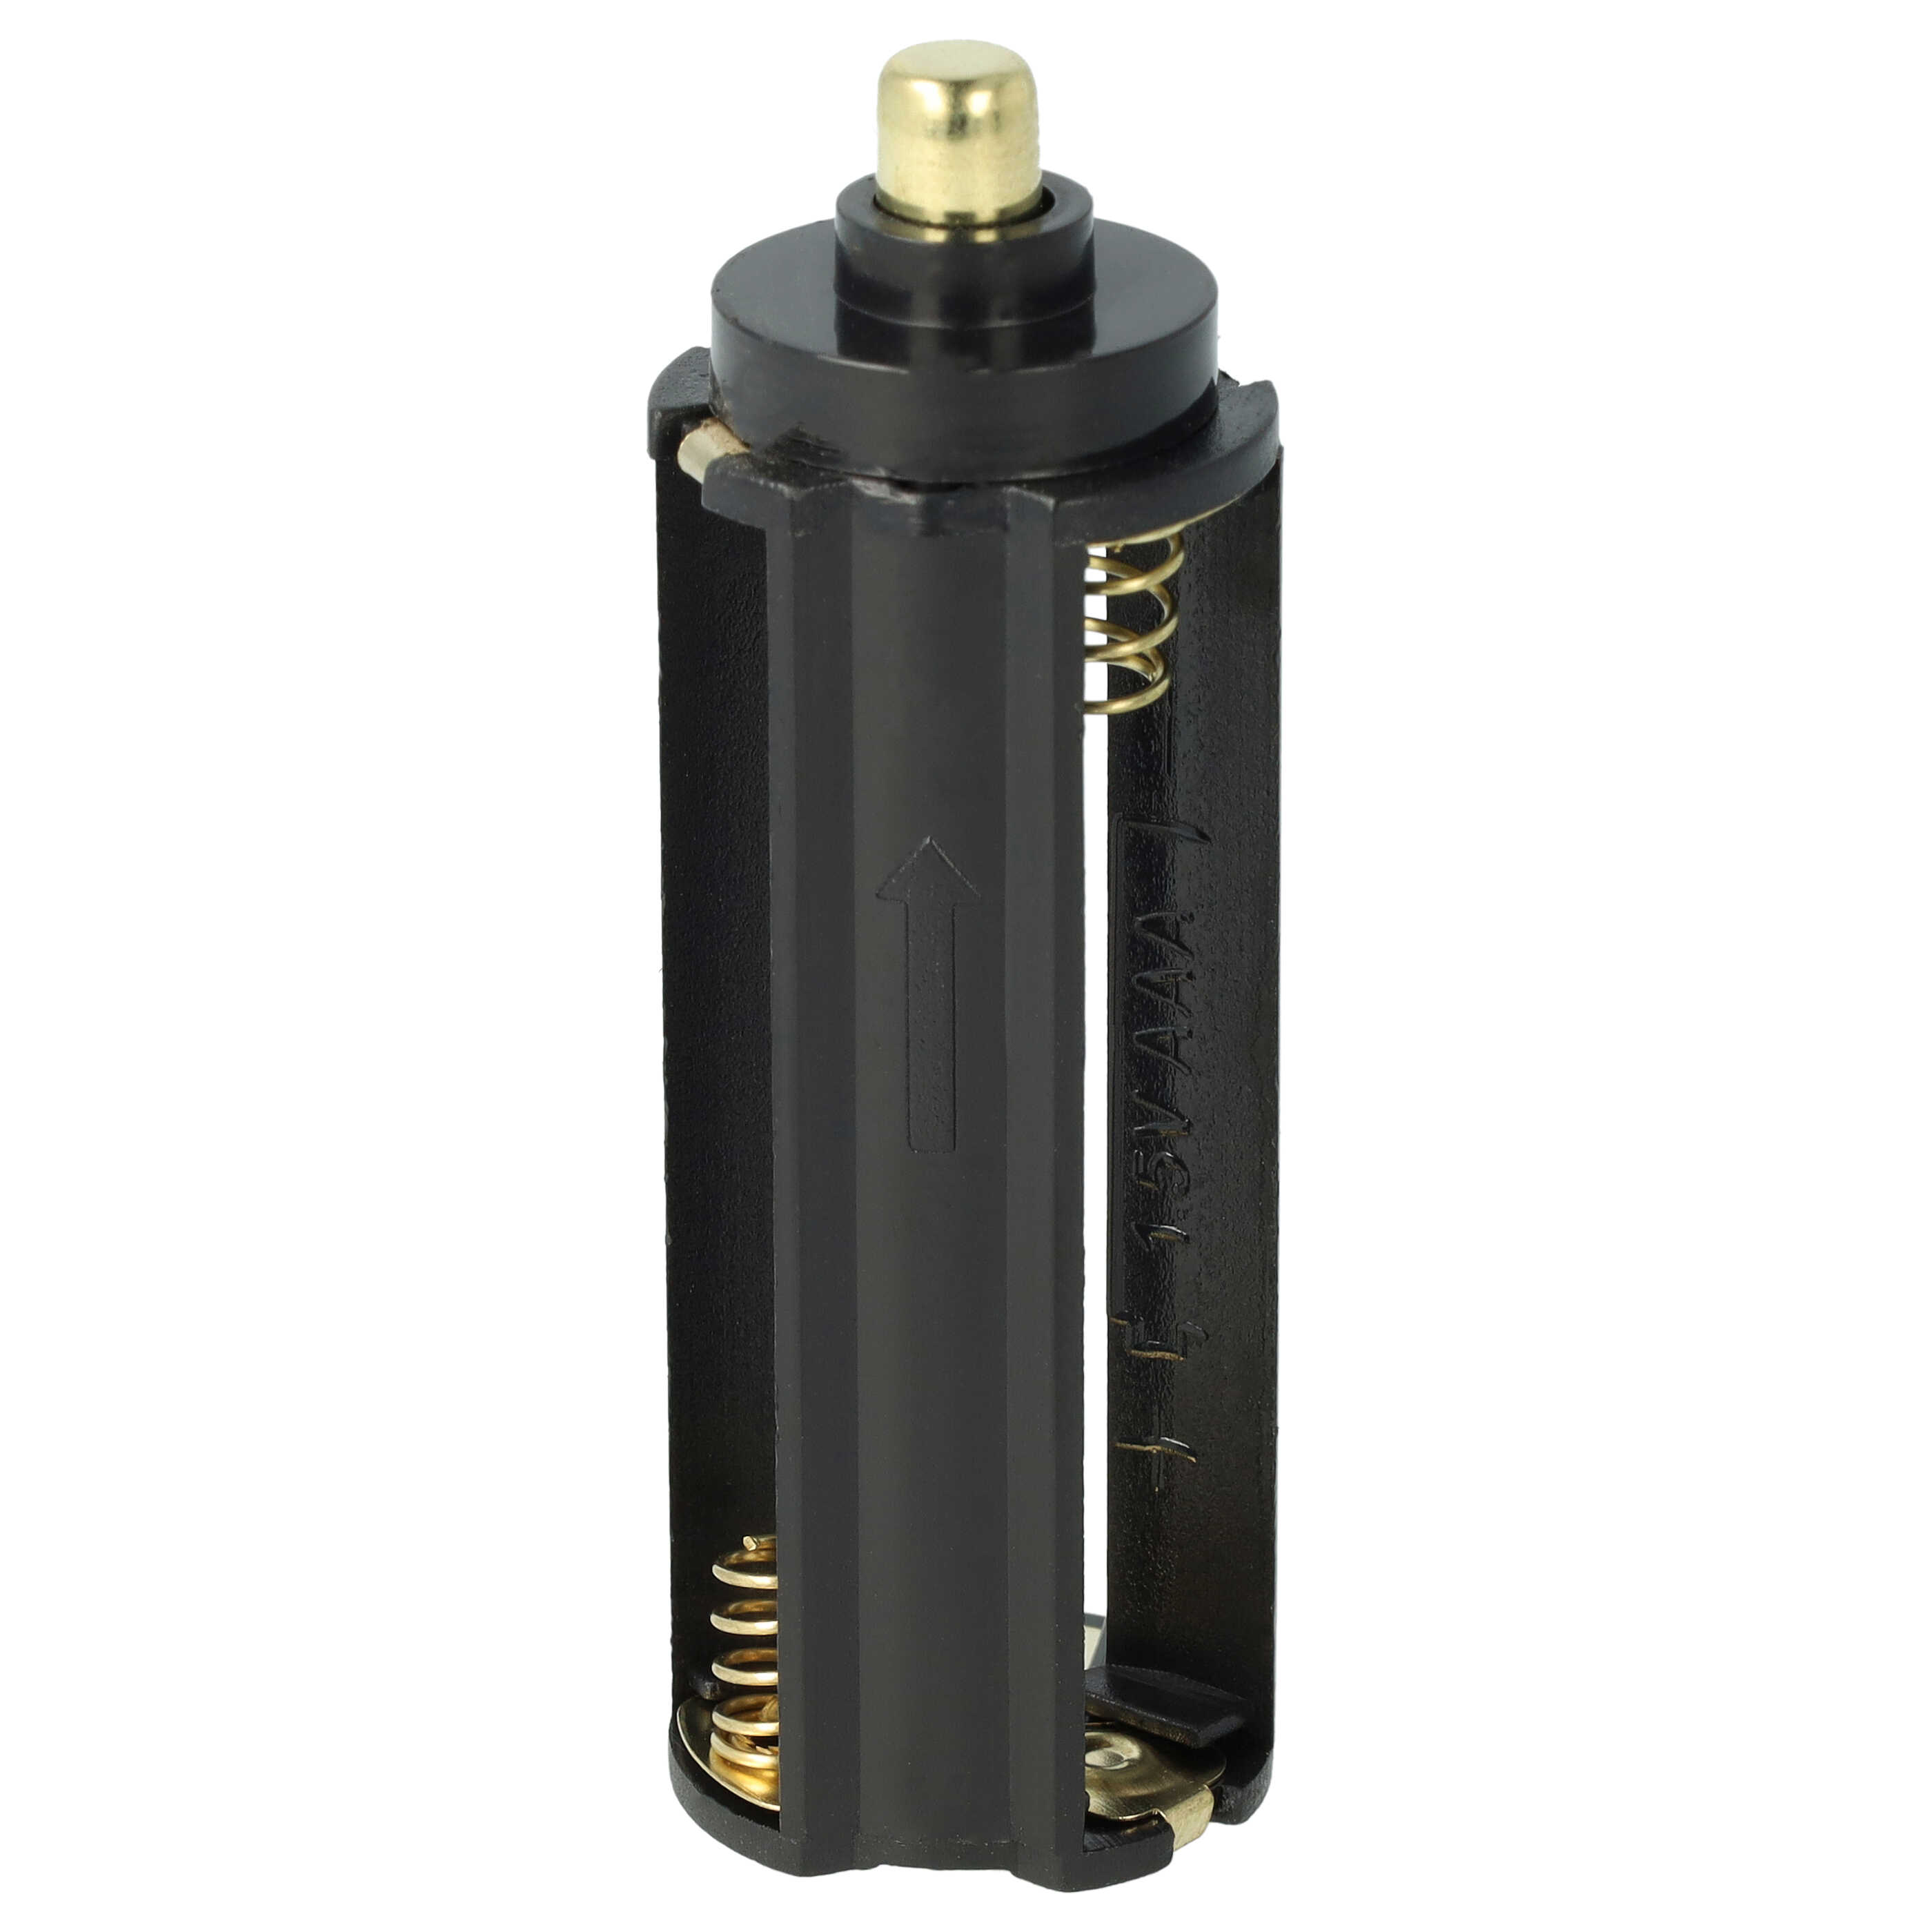 Boitier convertisseur 3x piles Micro / AAA vers 18650 pour lampe torche